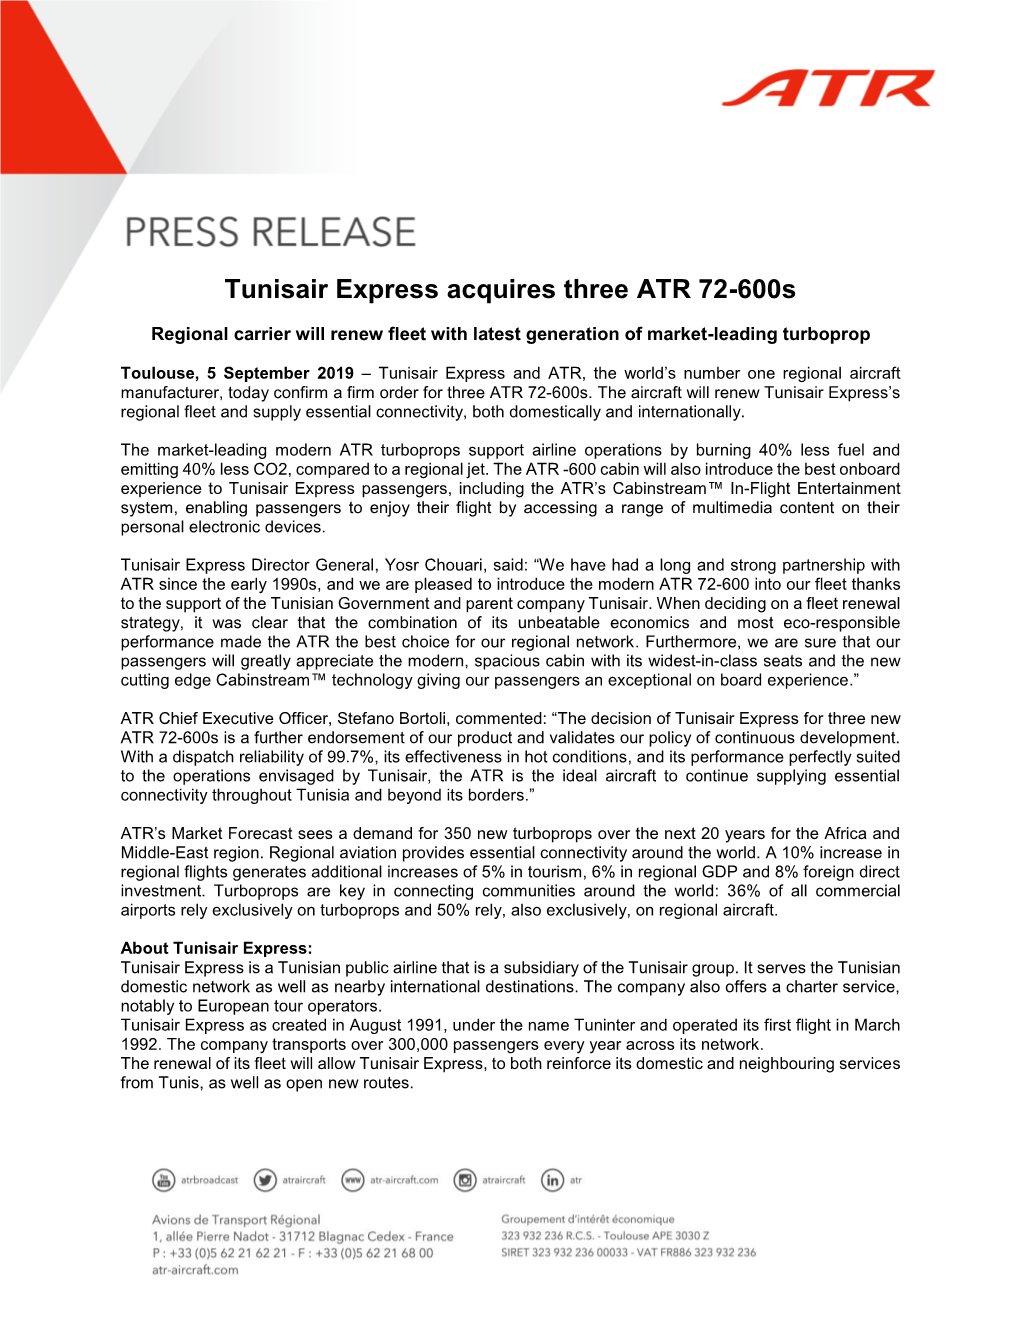 Tunisair Express Acquires Three ATR 72-600S